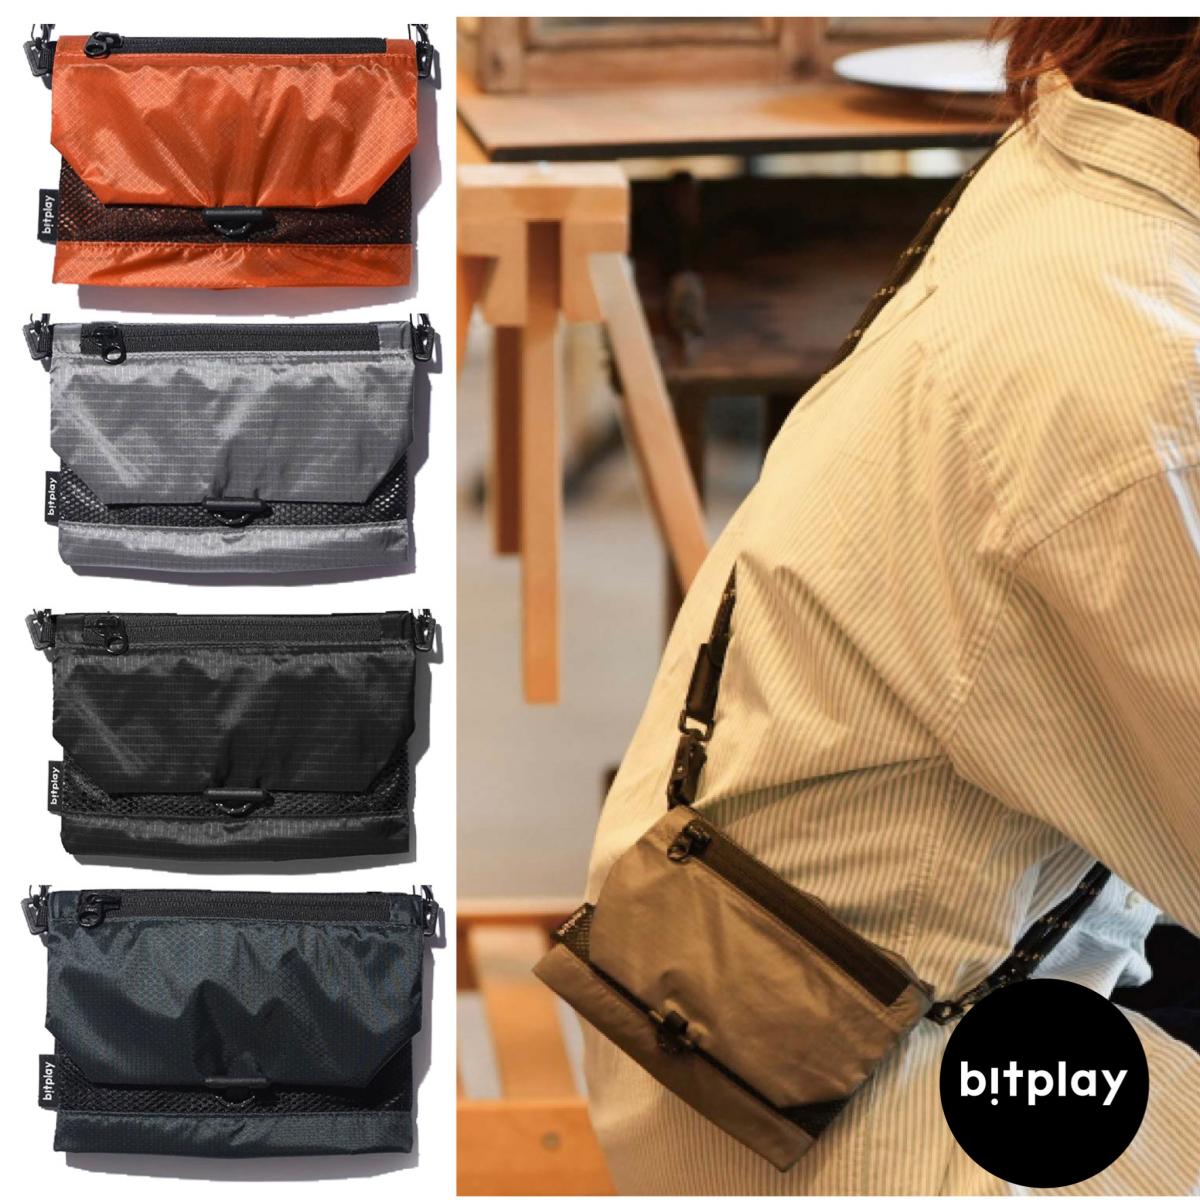 Foldable 2 Way Bag 超輕量翻轉口袋包 | 隨身小包 | 購物袋 | 側背包 | 防潑水 |抗撕裂- 淺灰色